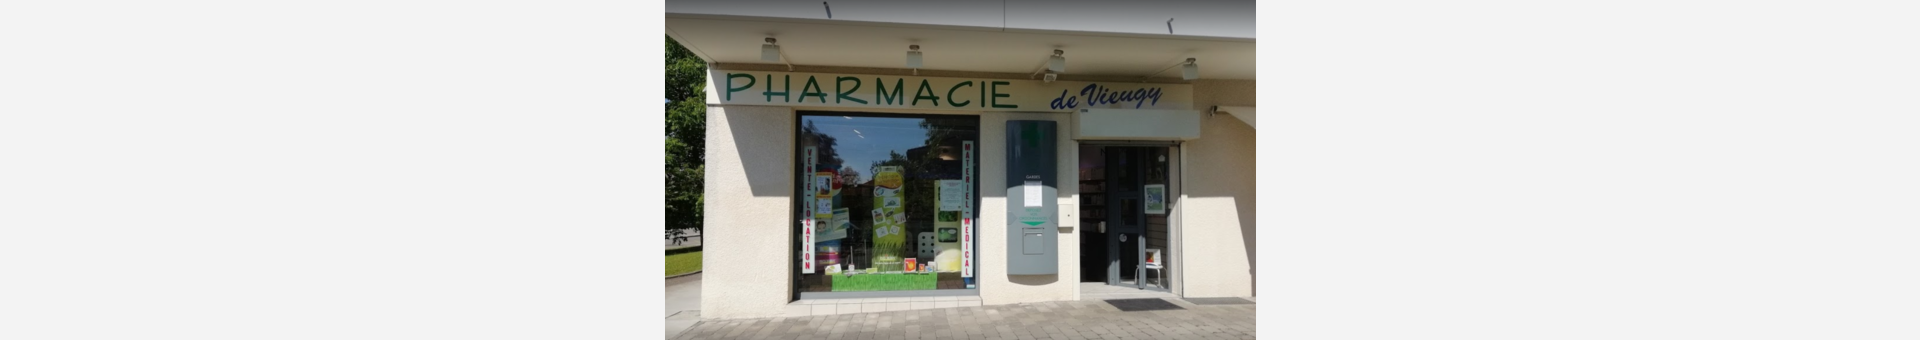 Pharmacie de Vieugy,Seynod